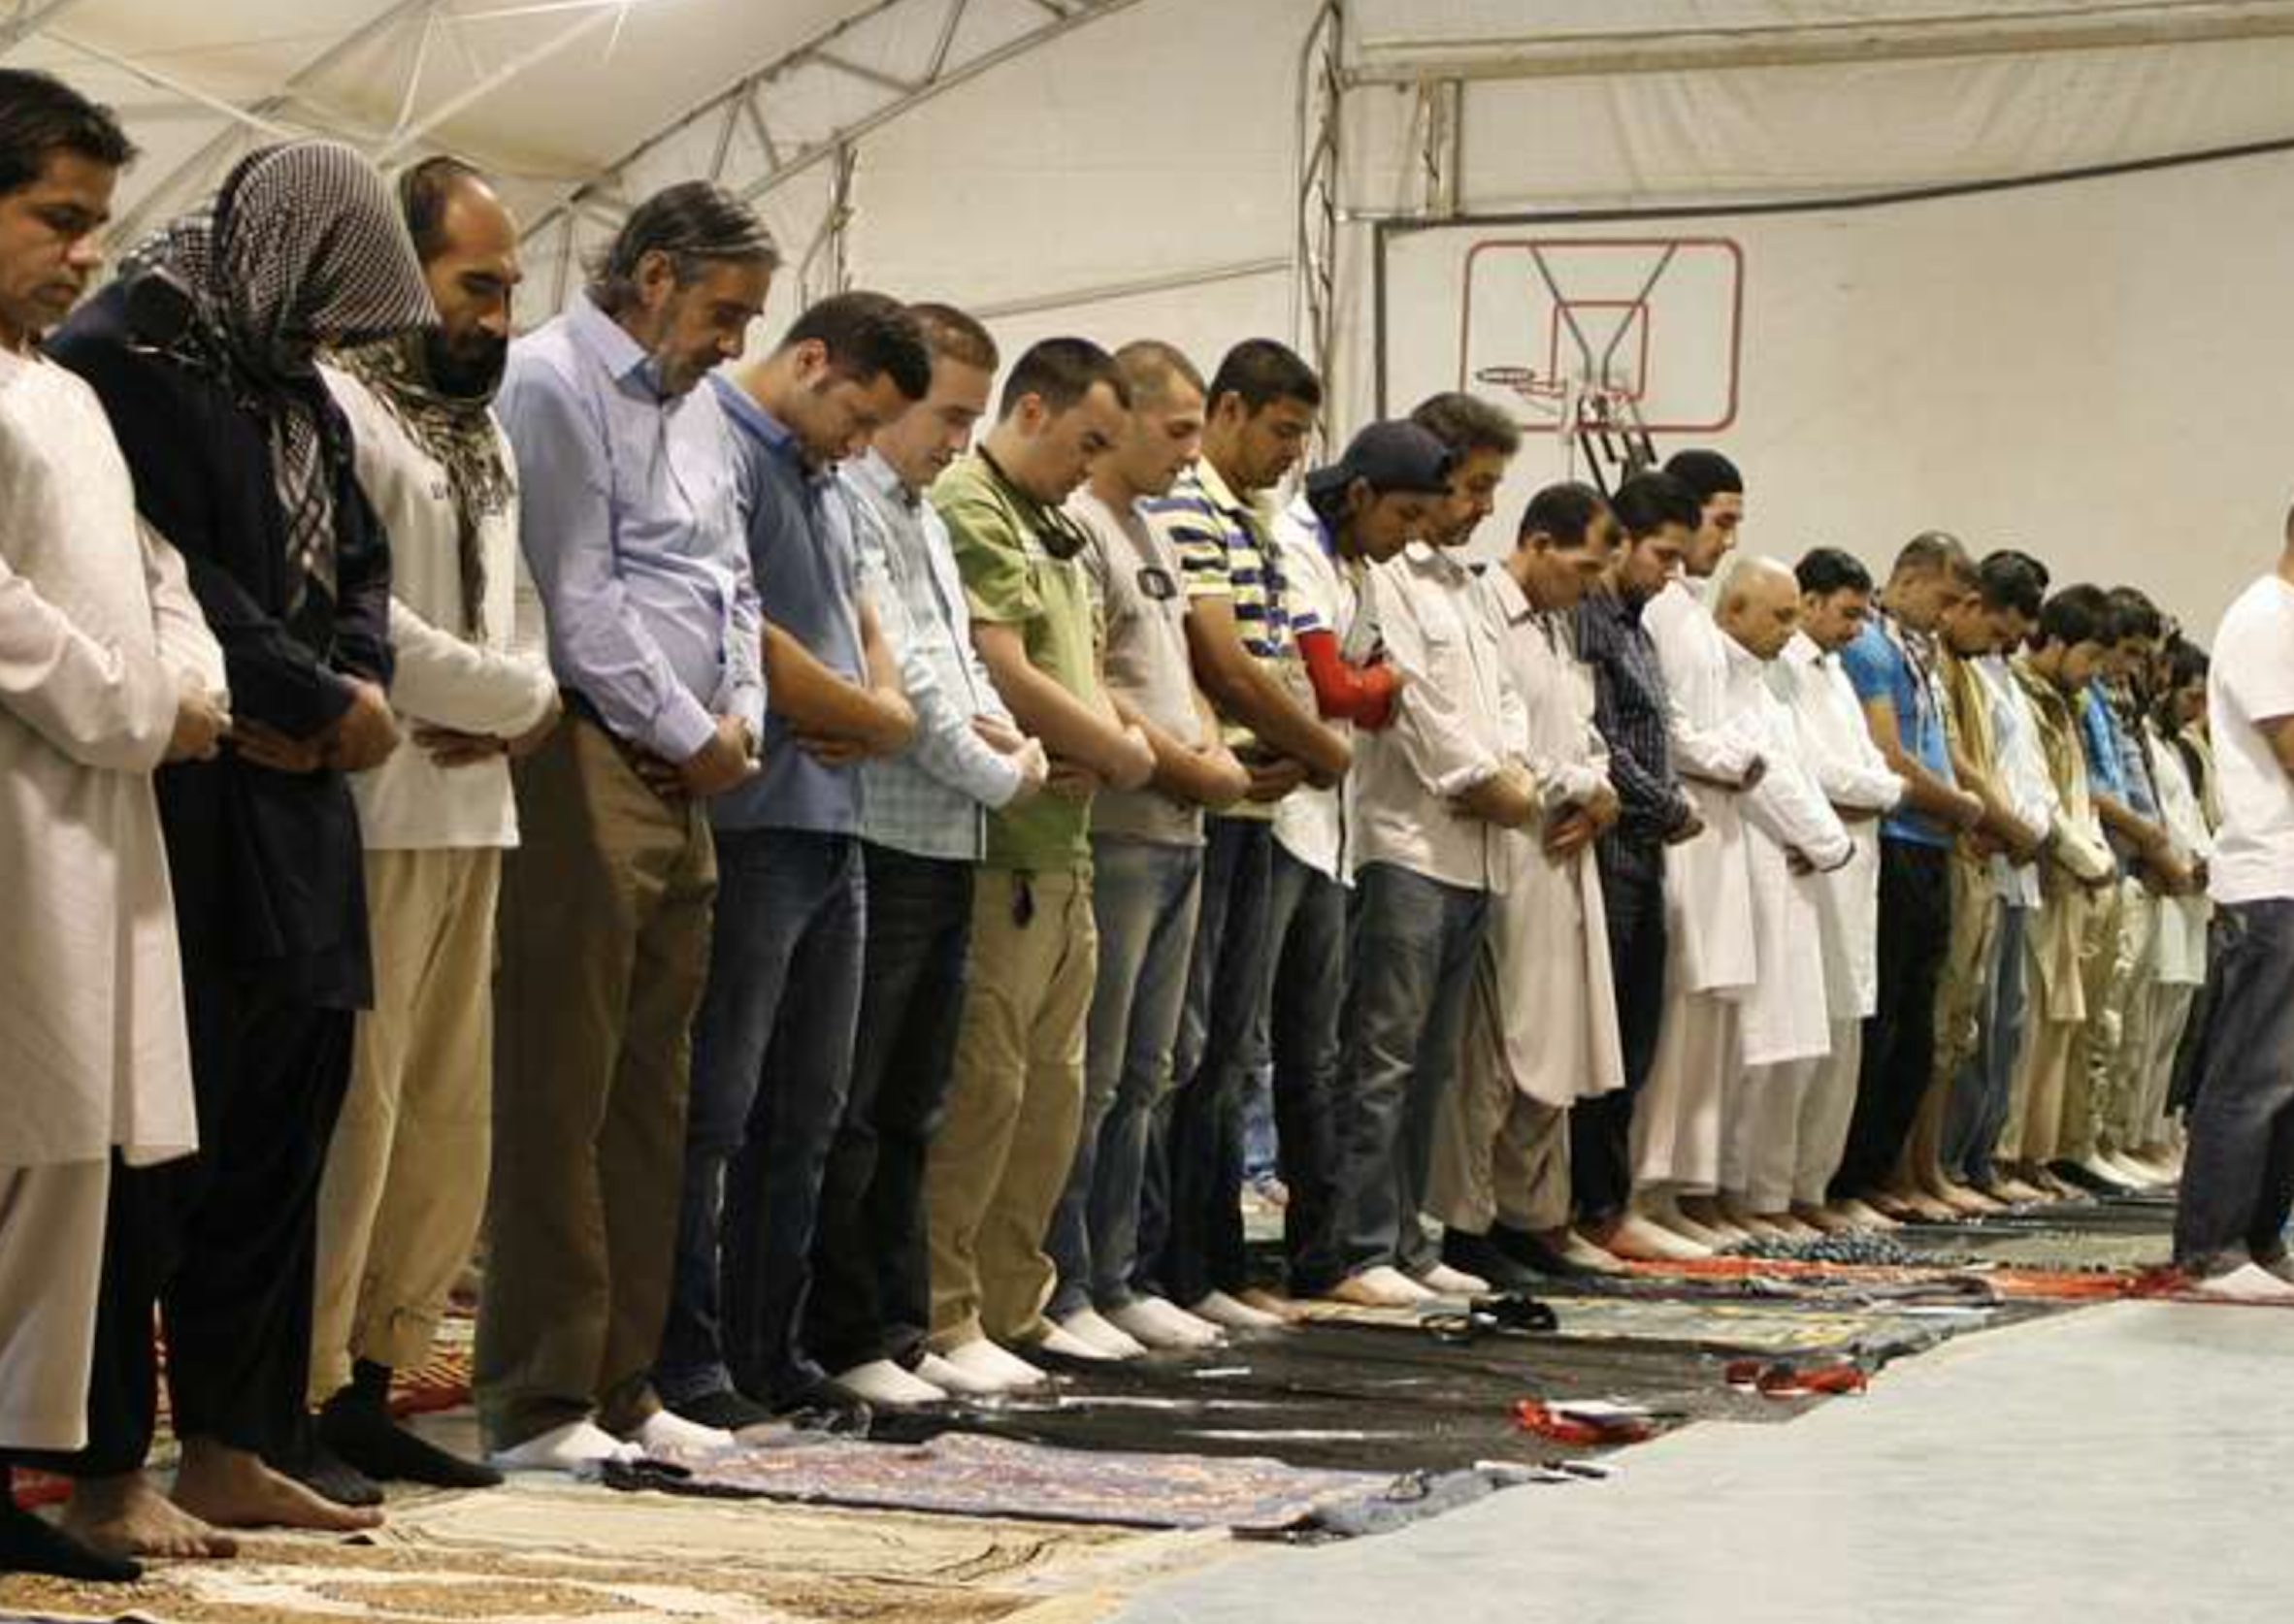 Coalition service members and civilian contractors participate in an Eid al-Fitr ceremony